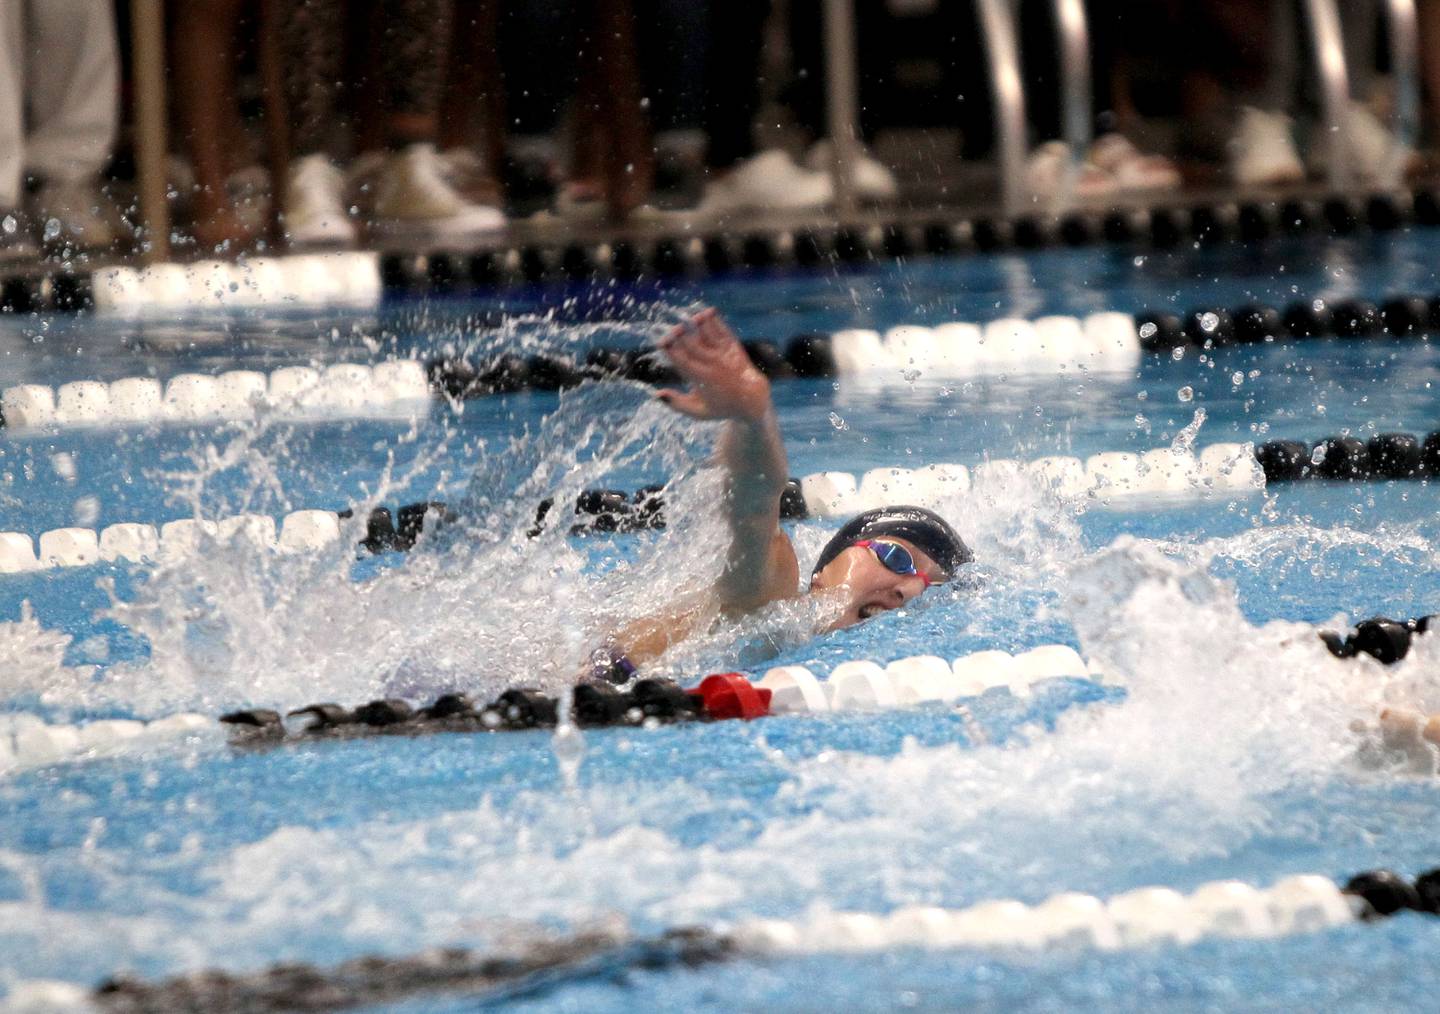 Richmond-Burton's Elena Gewalt swims the 100-yard freestyle during the IHSA State Swimming Championship preliminaries at FMC Natatorium in Westmont on Friday, Nov. 12, 2021.